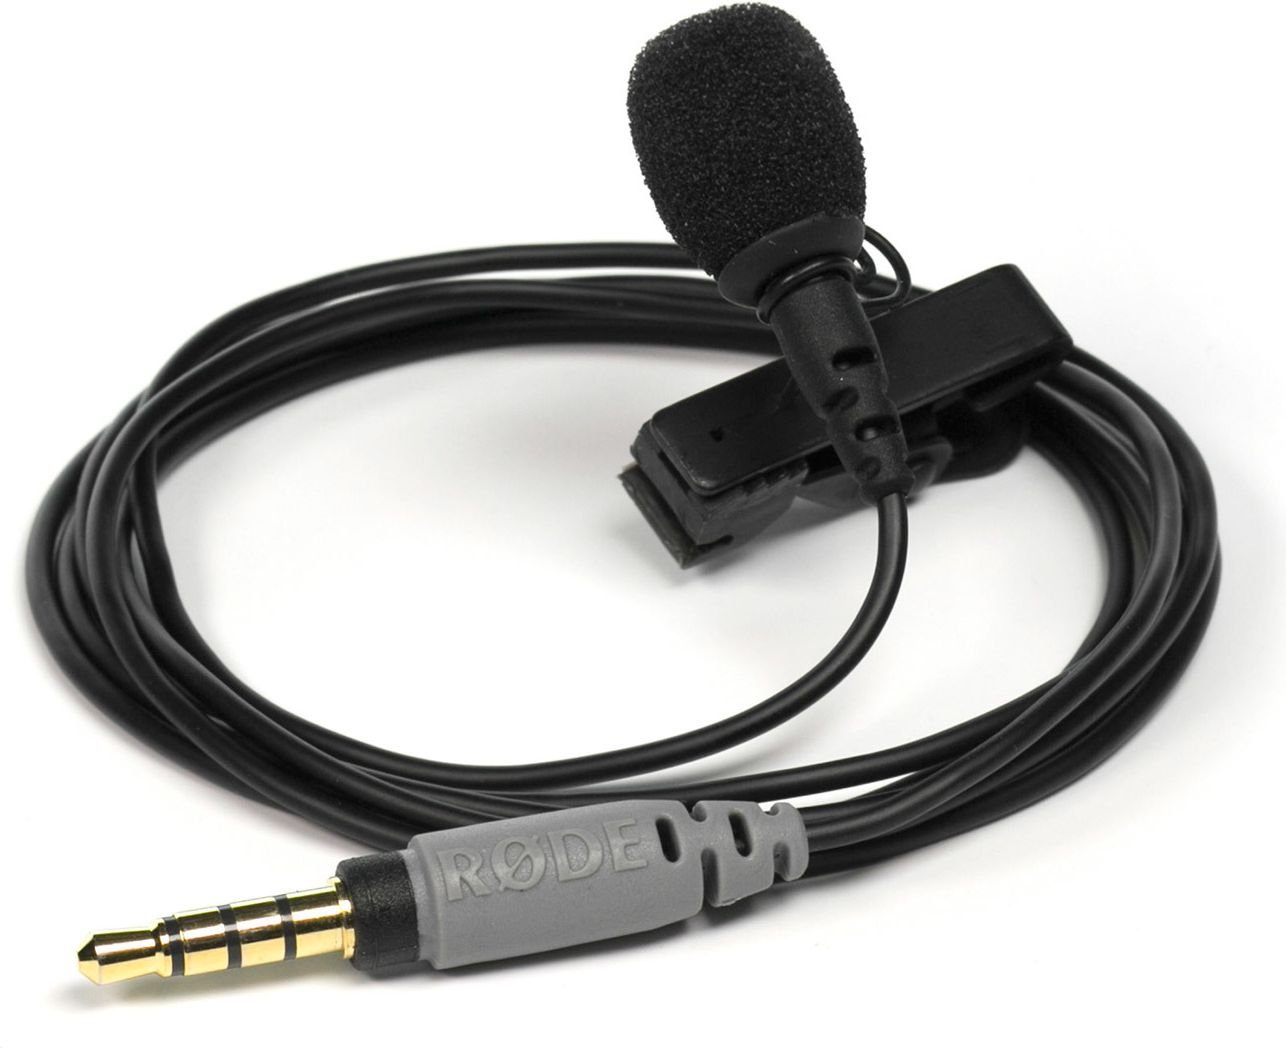 Microfoane - Microfon Rode SmartLav+ 400410010, capacitiv, Negru